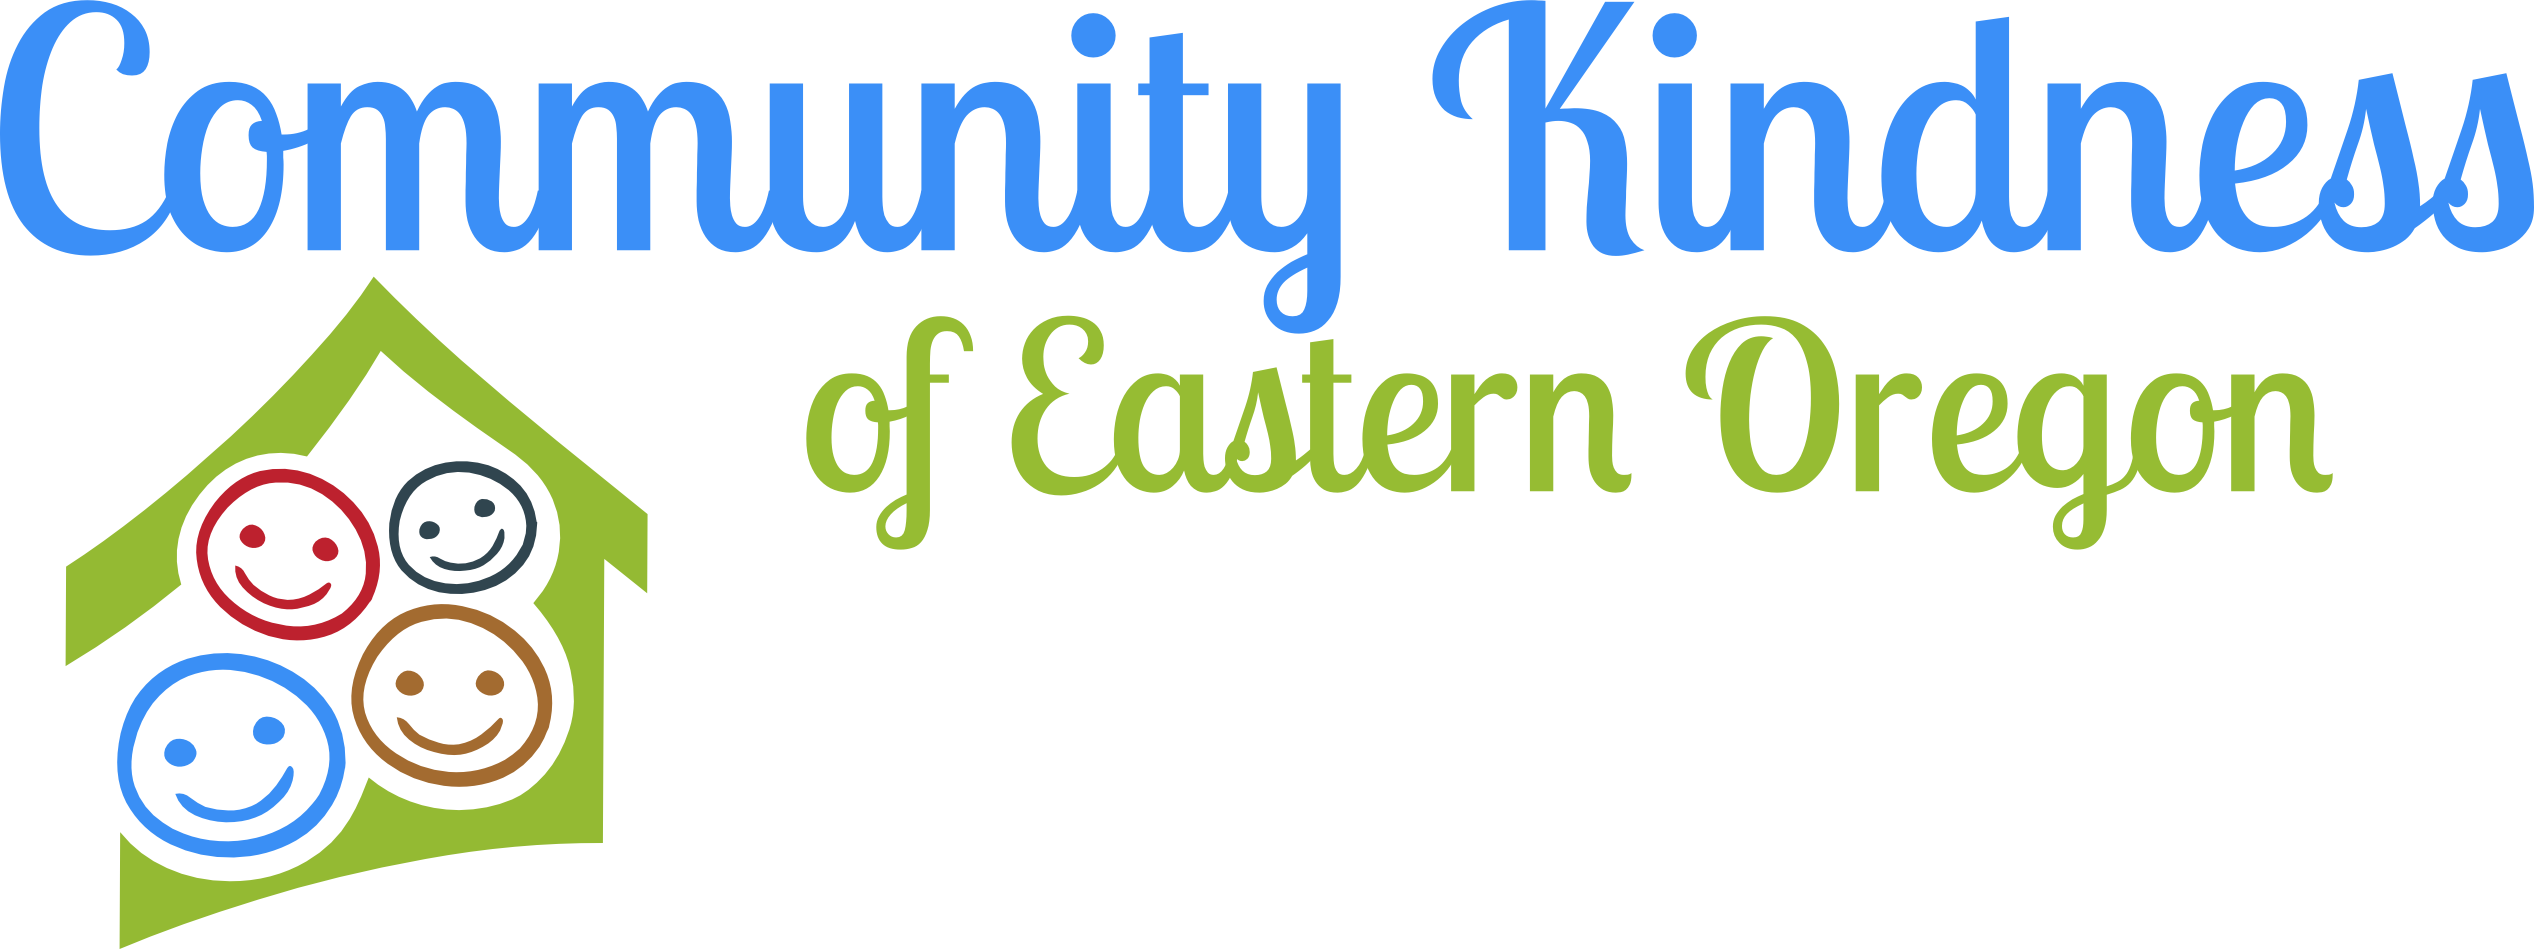 Community Kindness of Eastern Oregon